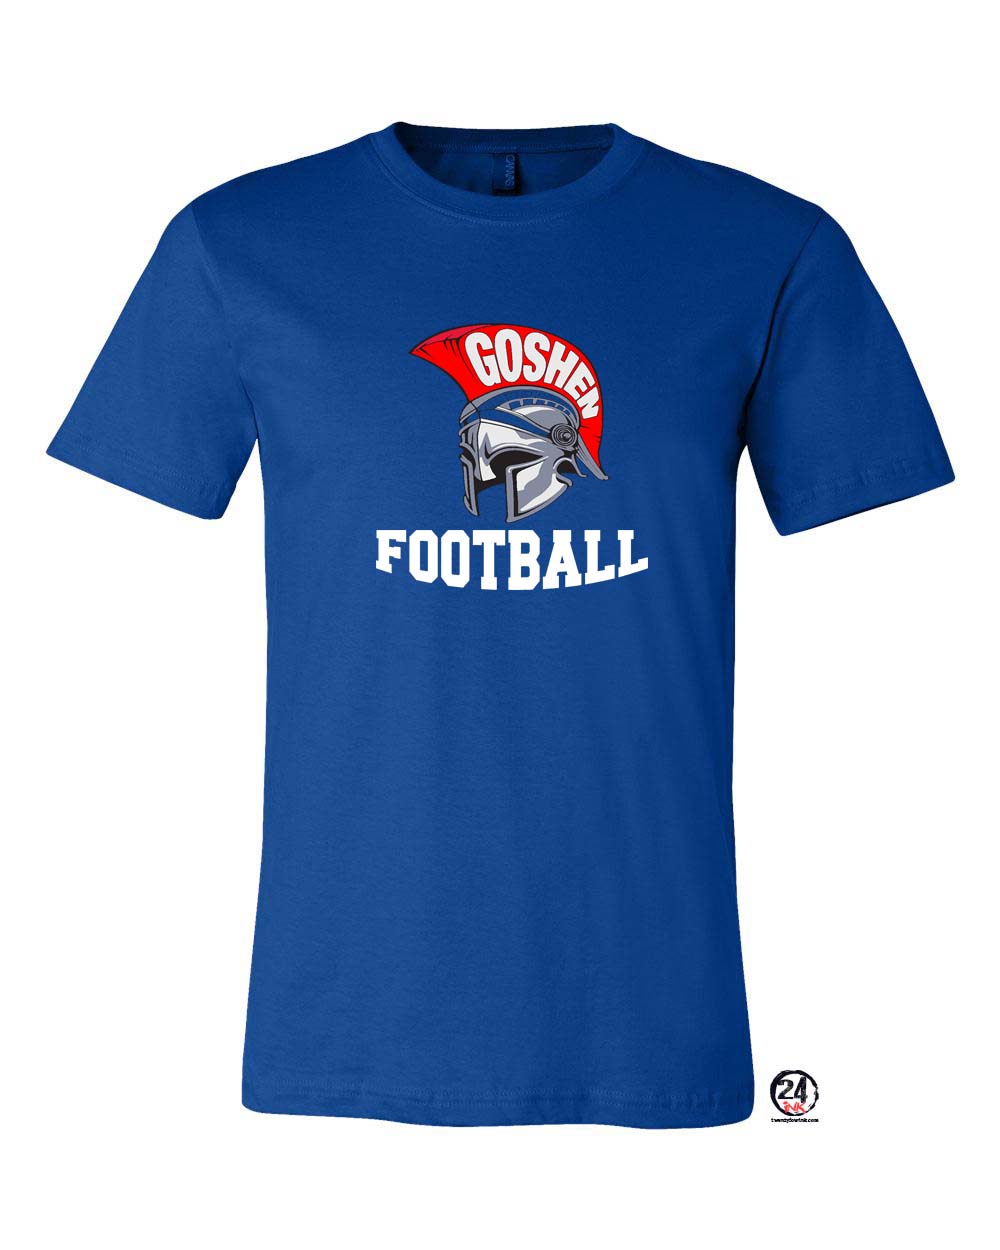 Goshen Head Football t-Shirt